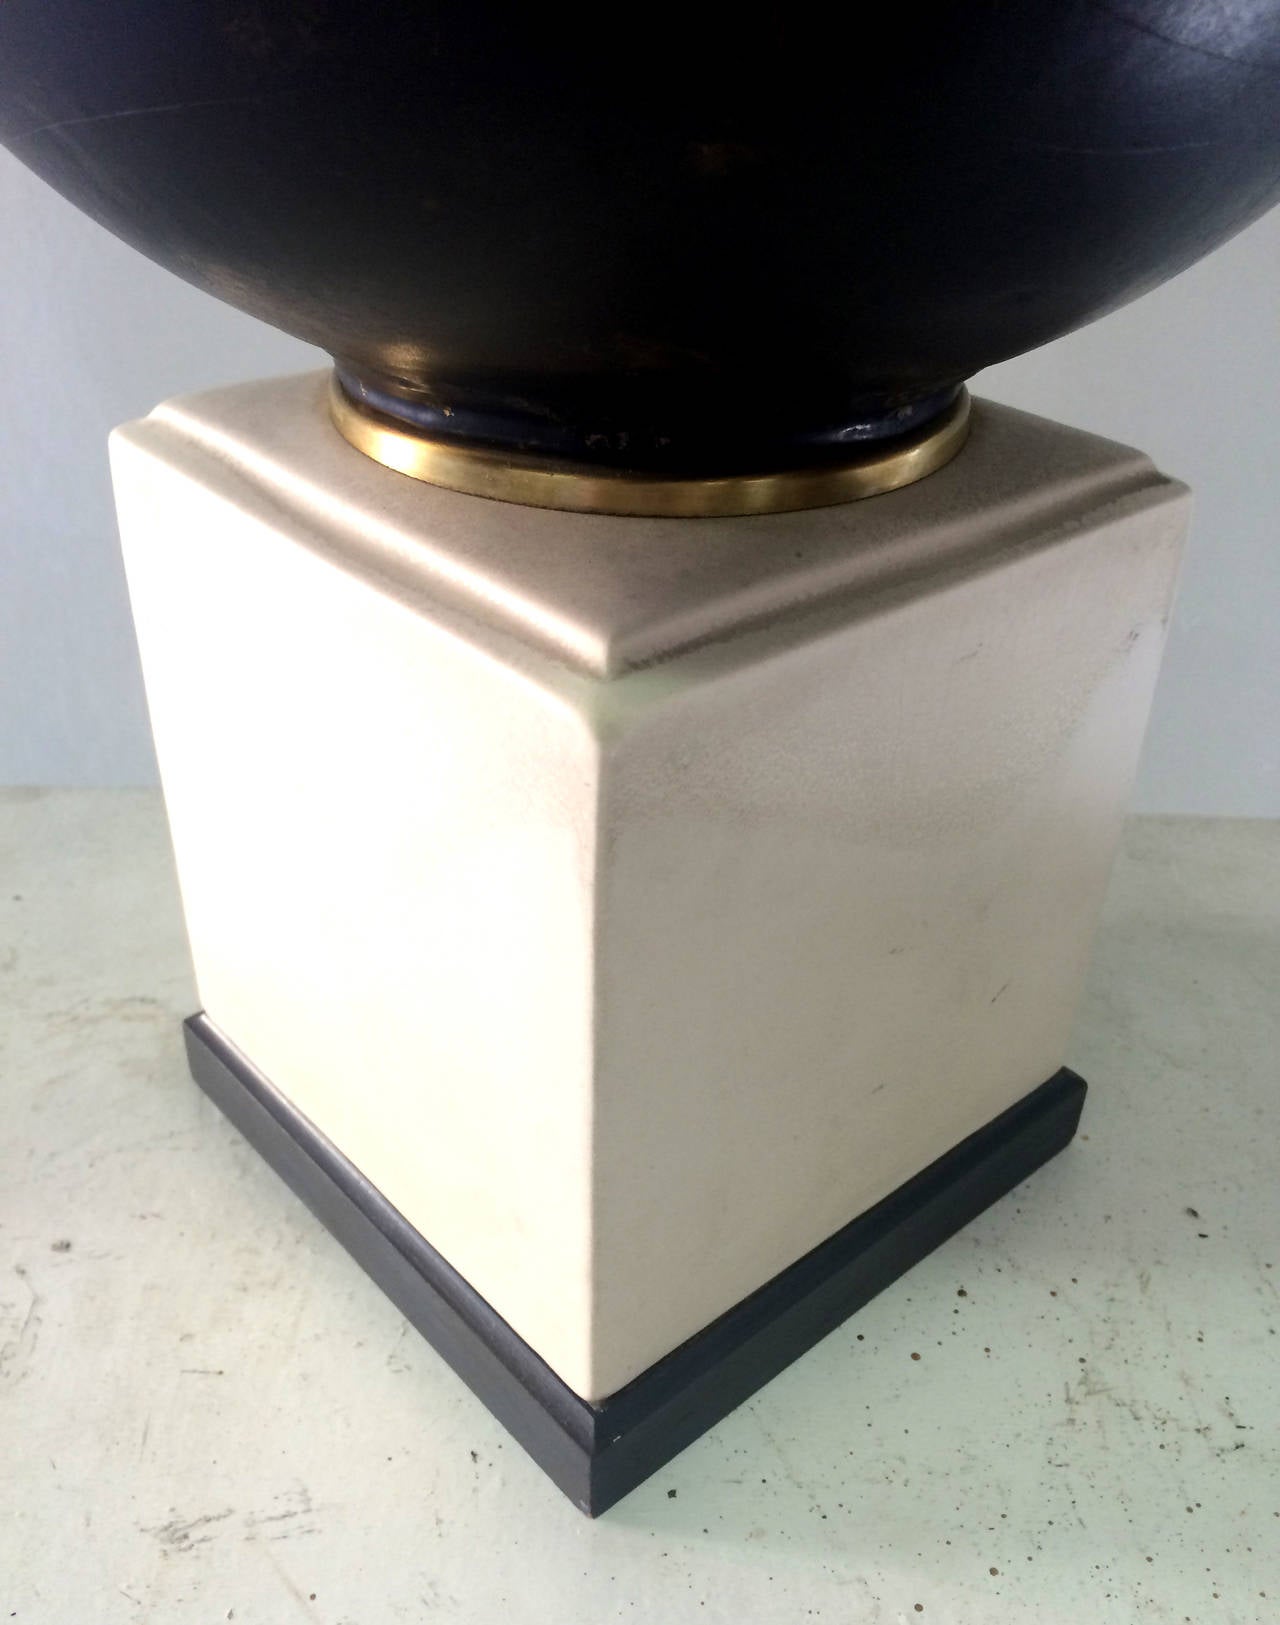 North American Black and Gold Unusual Ceramic Table Lamp